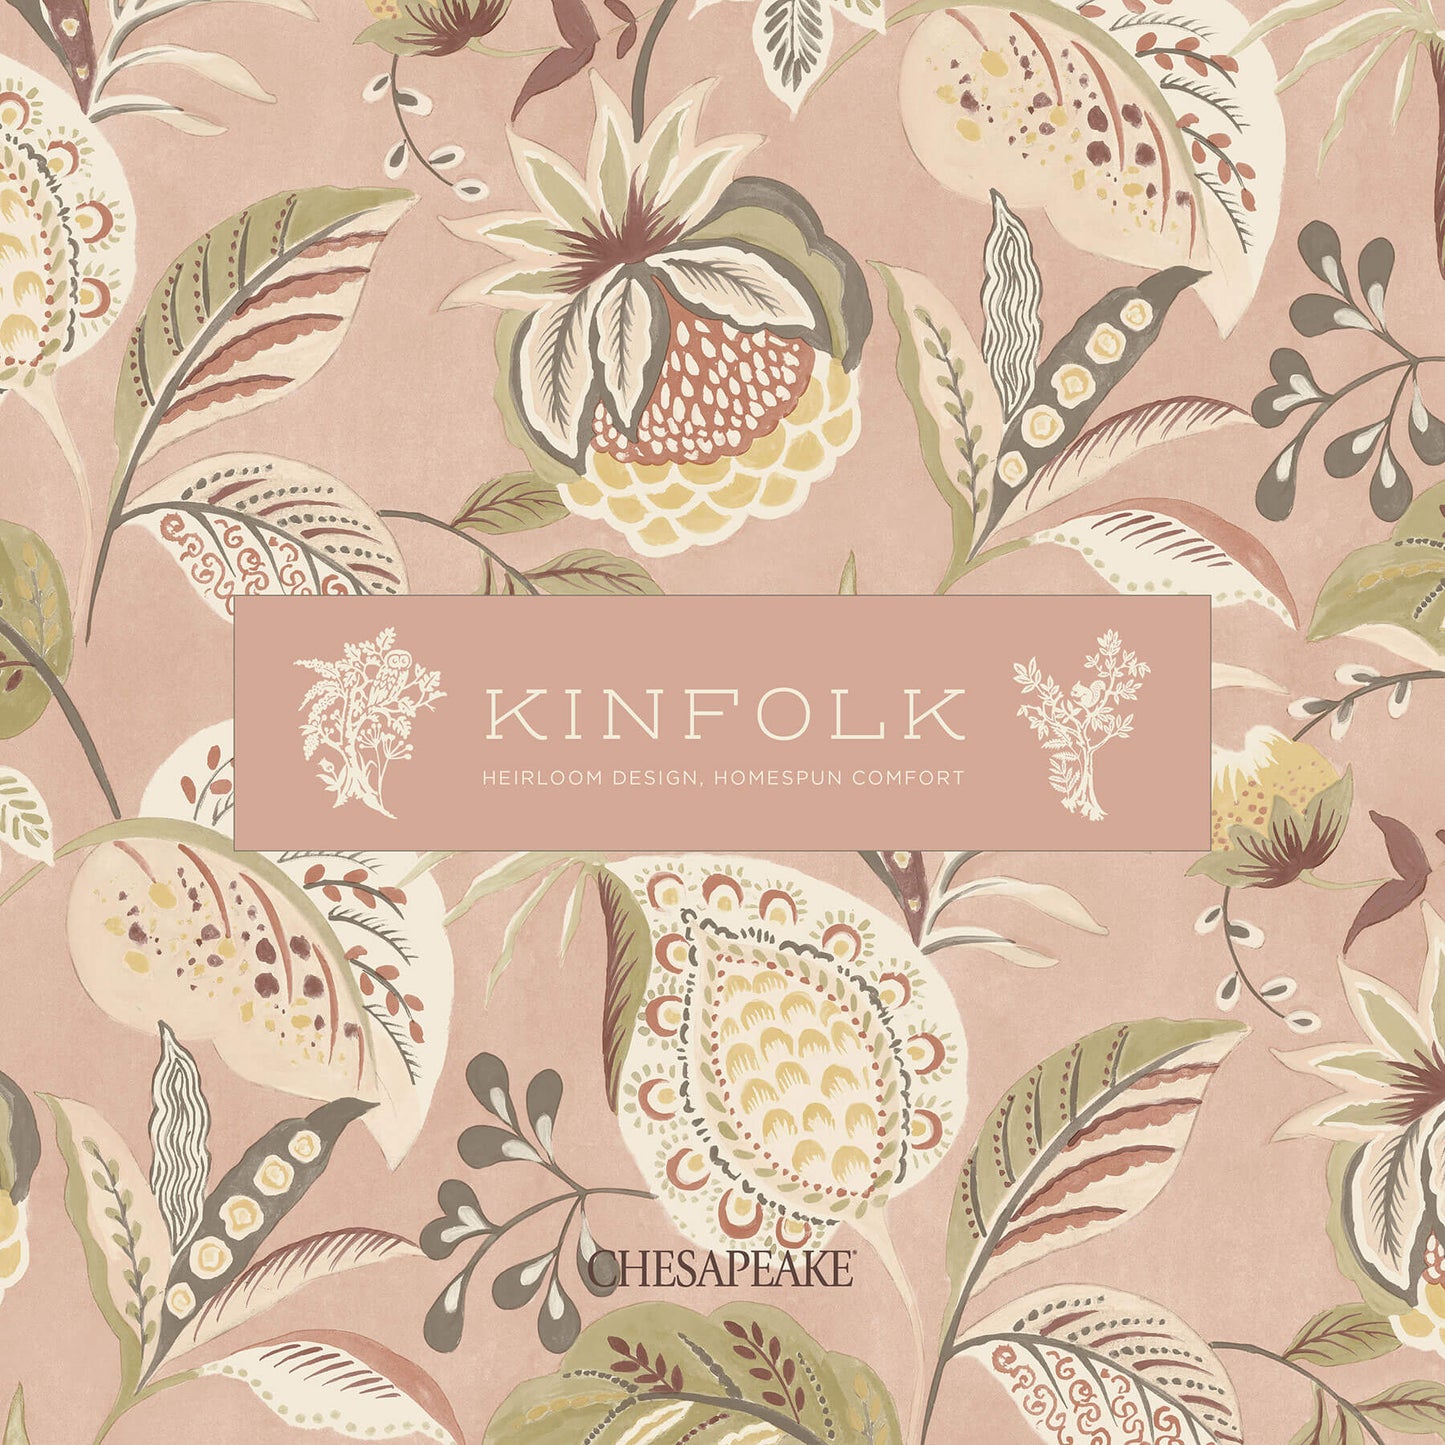 Chesapeake Kinfolk Spinnaker Netting Wallpaper - Seafoam